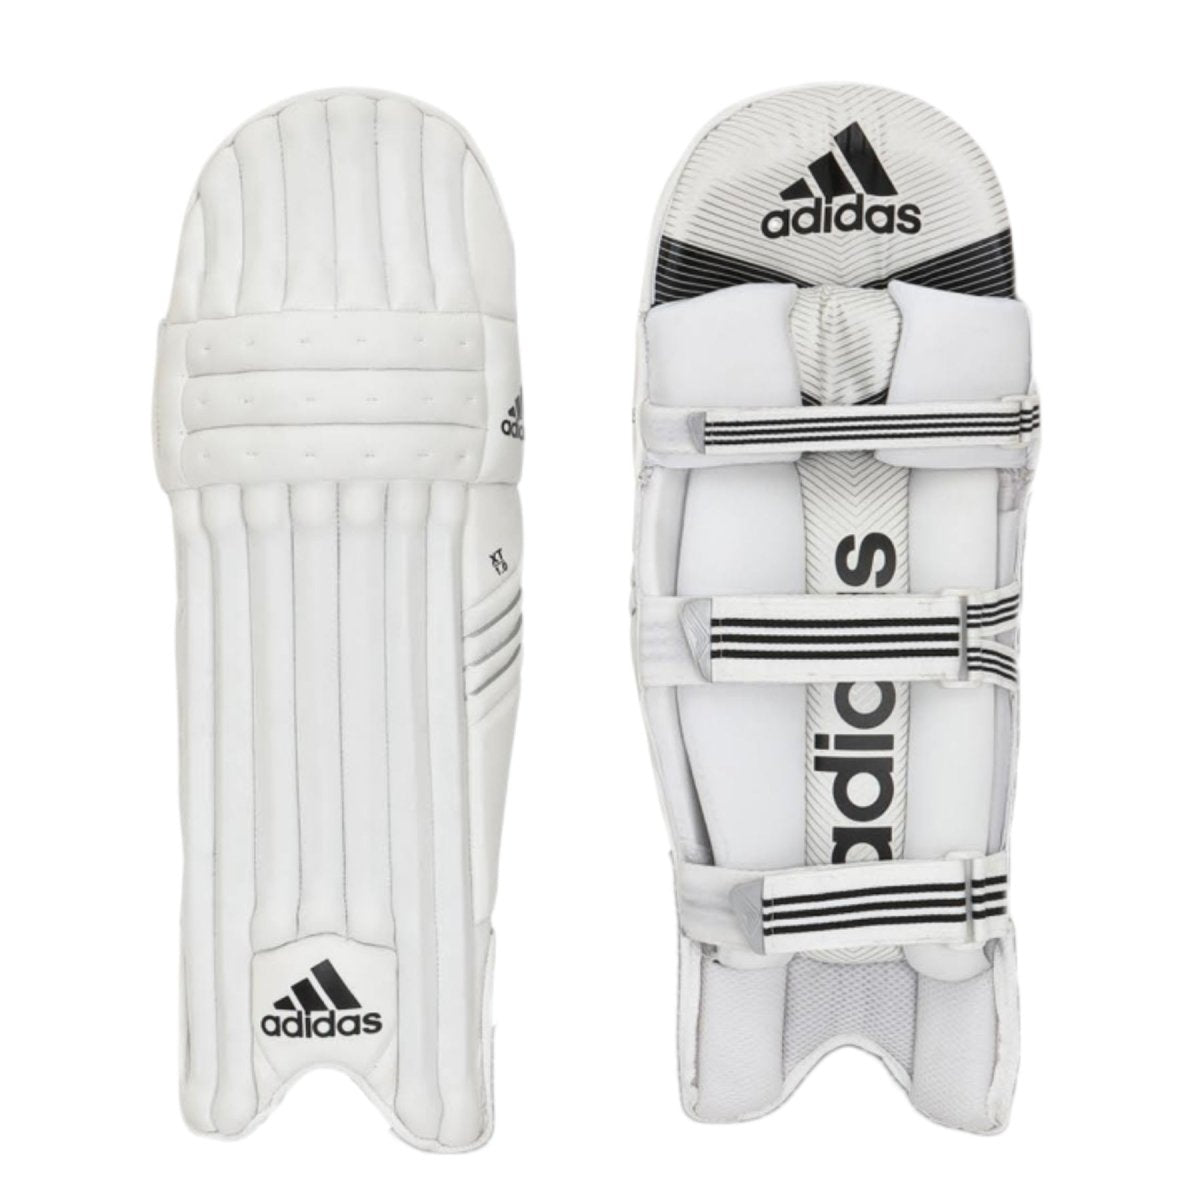 Adidas XT 2.0 Cricket Batting Pads